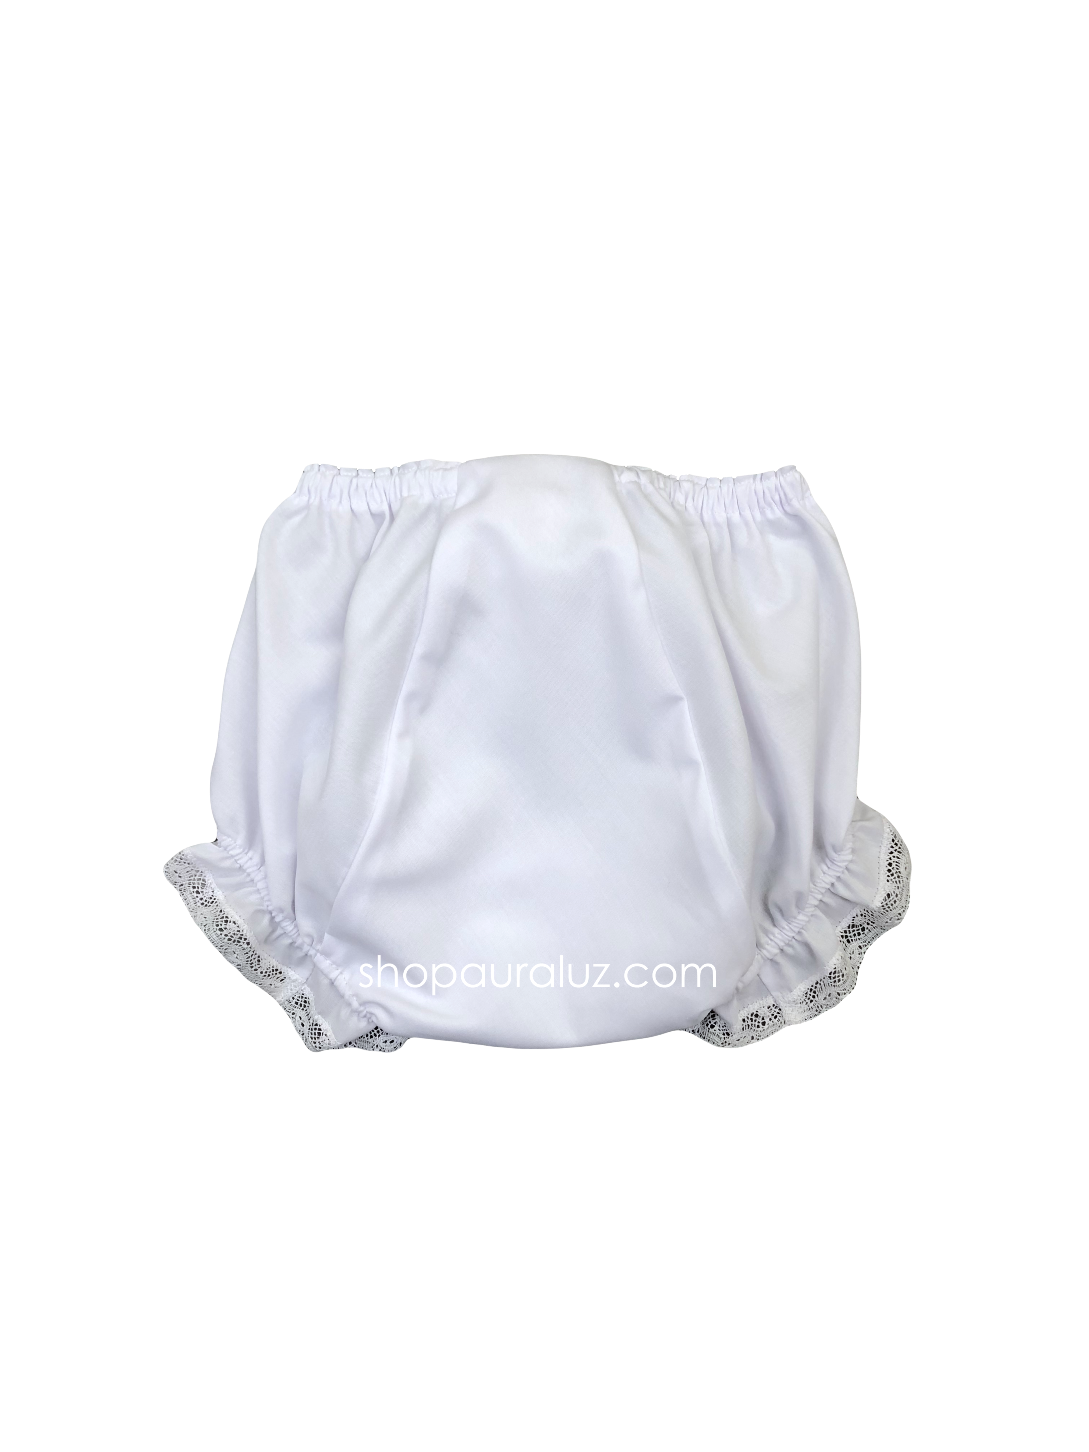 Auraluz Panty...White with white lace trim